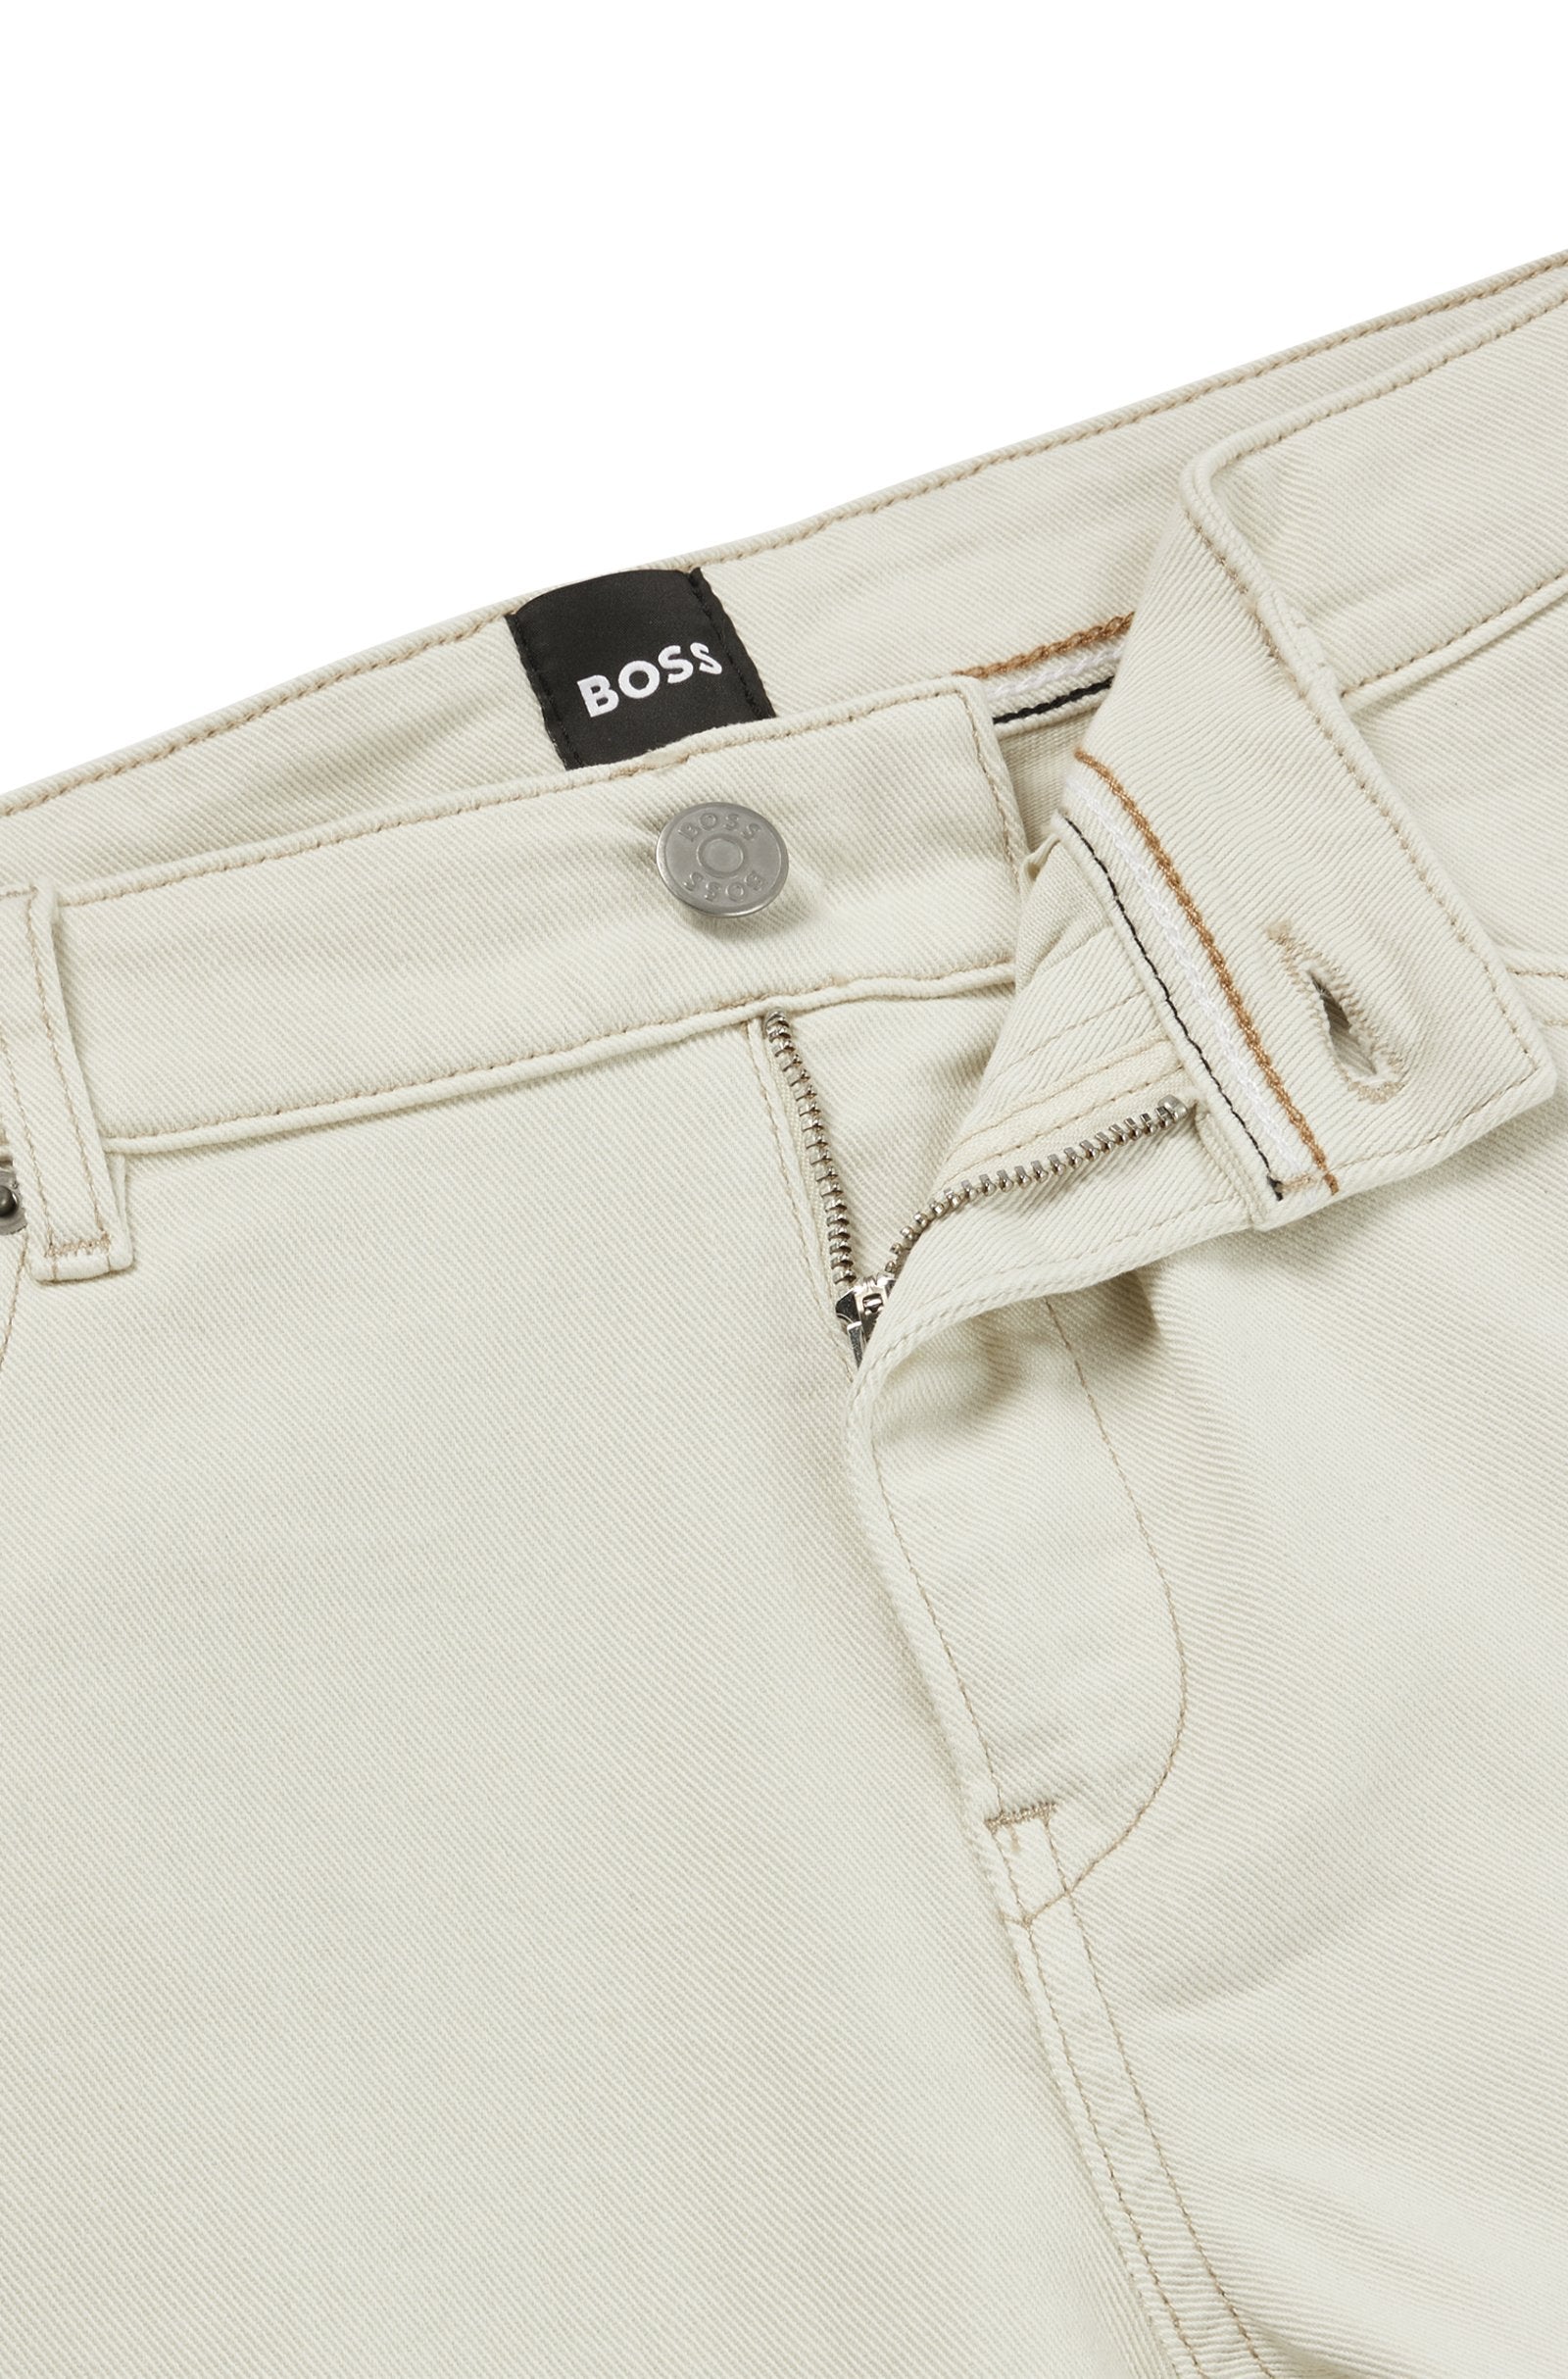 BOSS - DELAWARE3-1 Slim Fit Jeans In Super Soft Open White Italian Denim 50501074 131